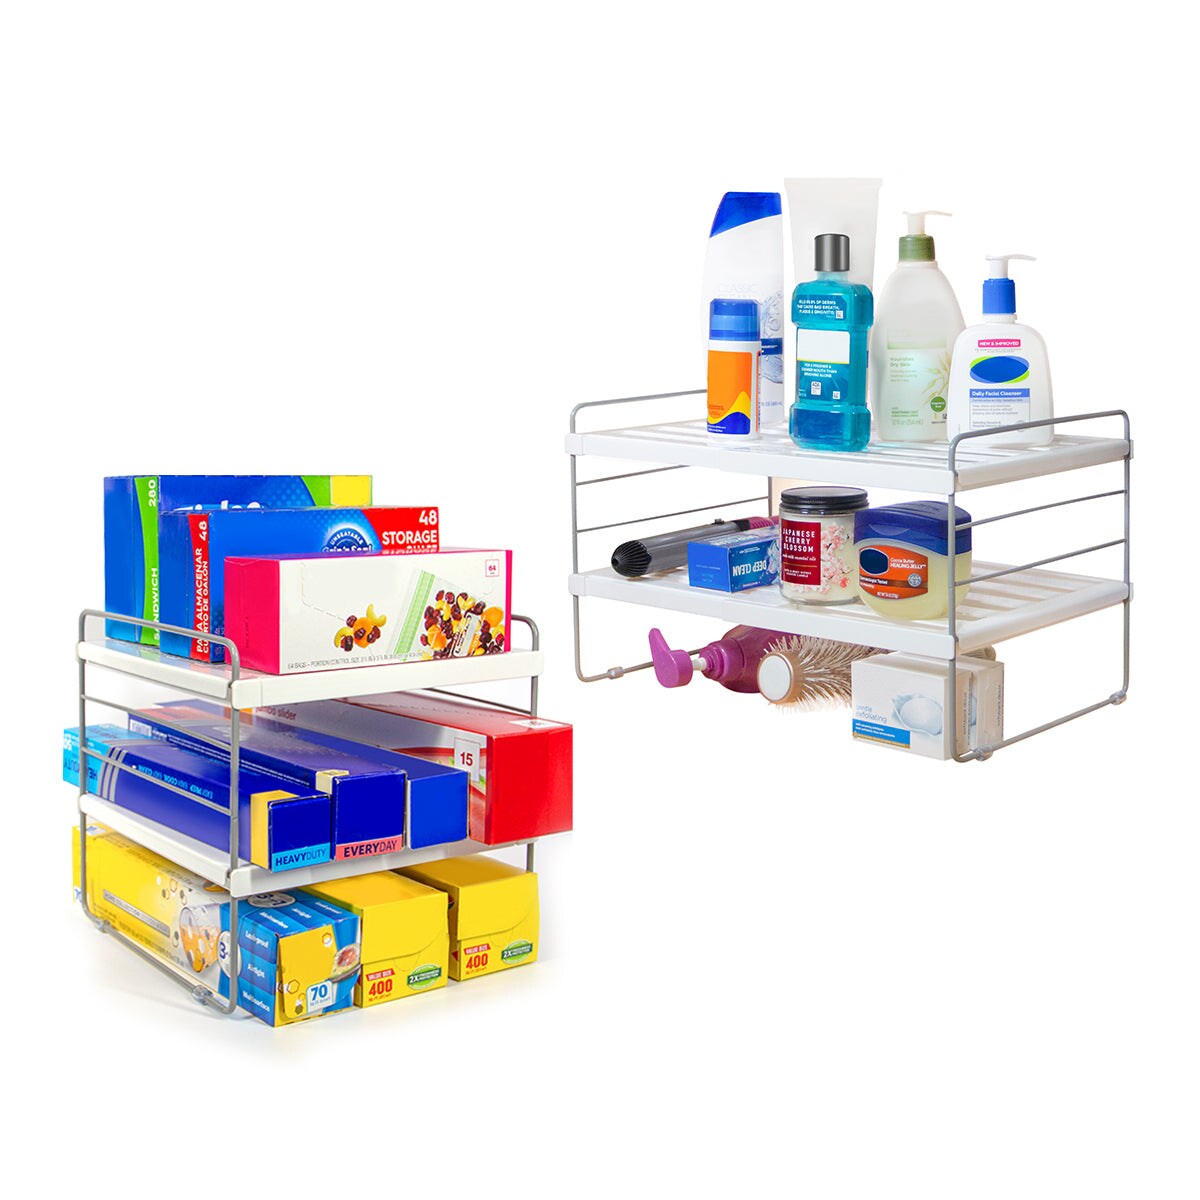 Expandable Kitchen Cabinet Shelf Organizers, Heavy Duty Adjustable